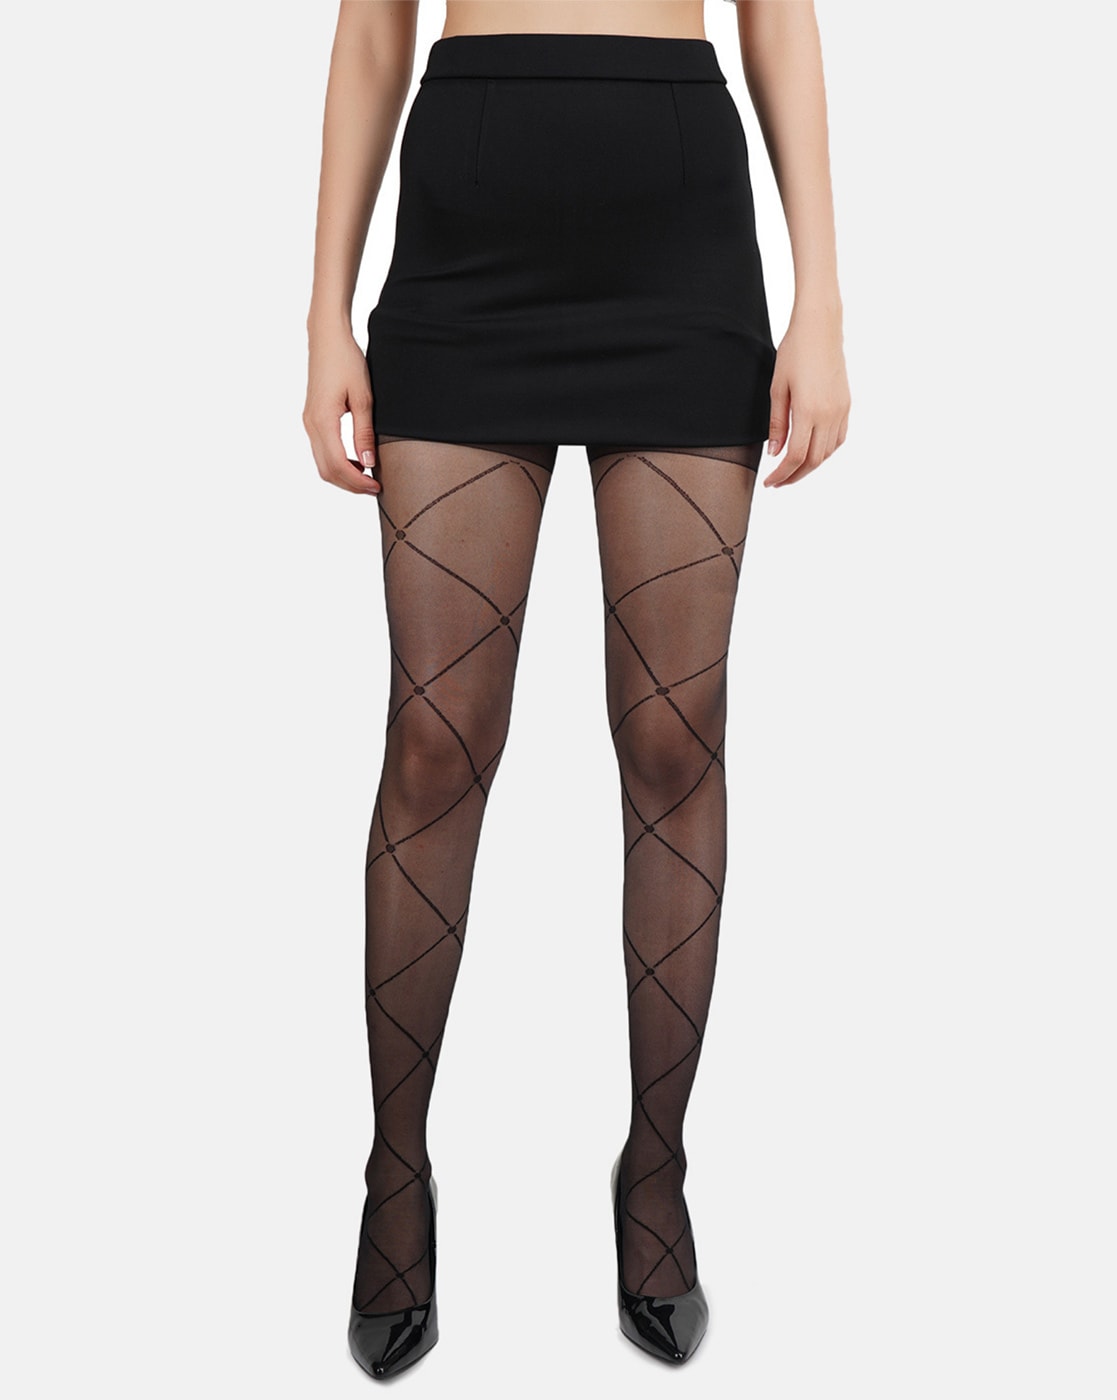 Buy N2S NEXT2SKIN Women's Fishnet Pattern Mesh Pantyhose Stockings  (N2S211_Pz, Black, Small Net) for Women Online in India